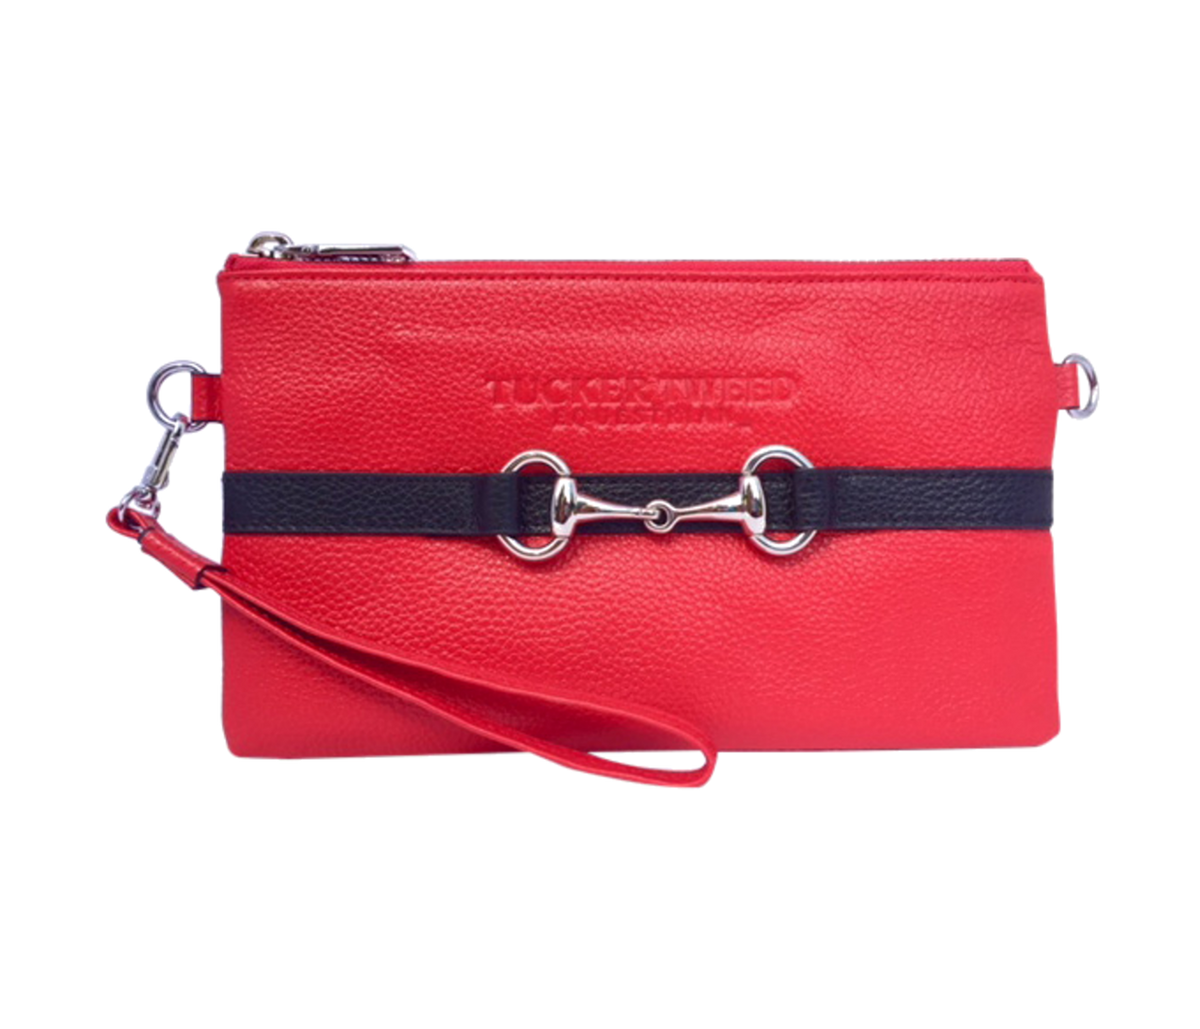 Tucker Tweed Leather Handbags Red/Black The Wellington Wristlet